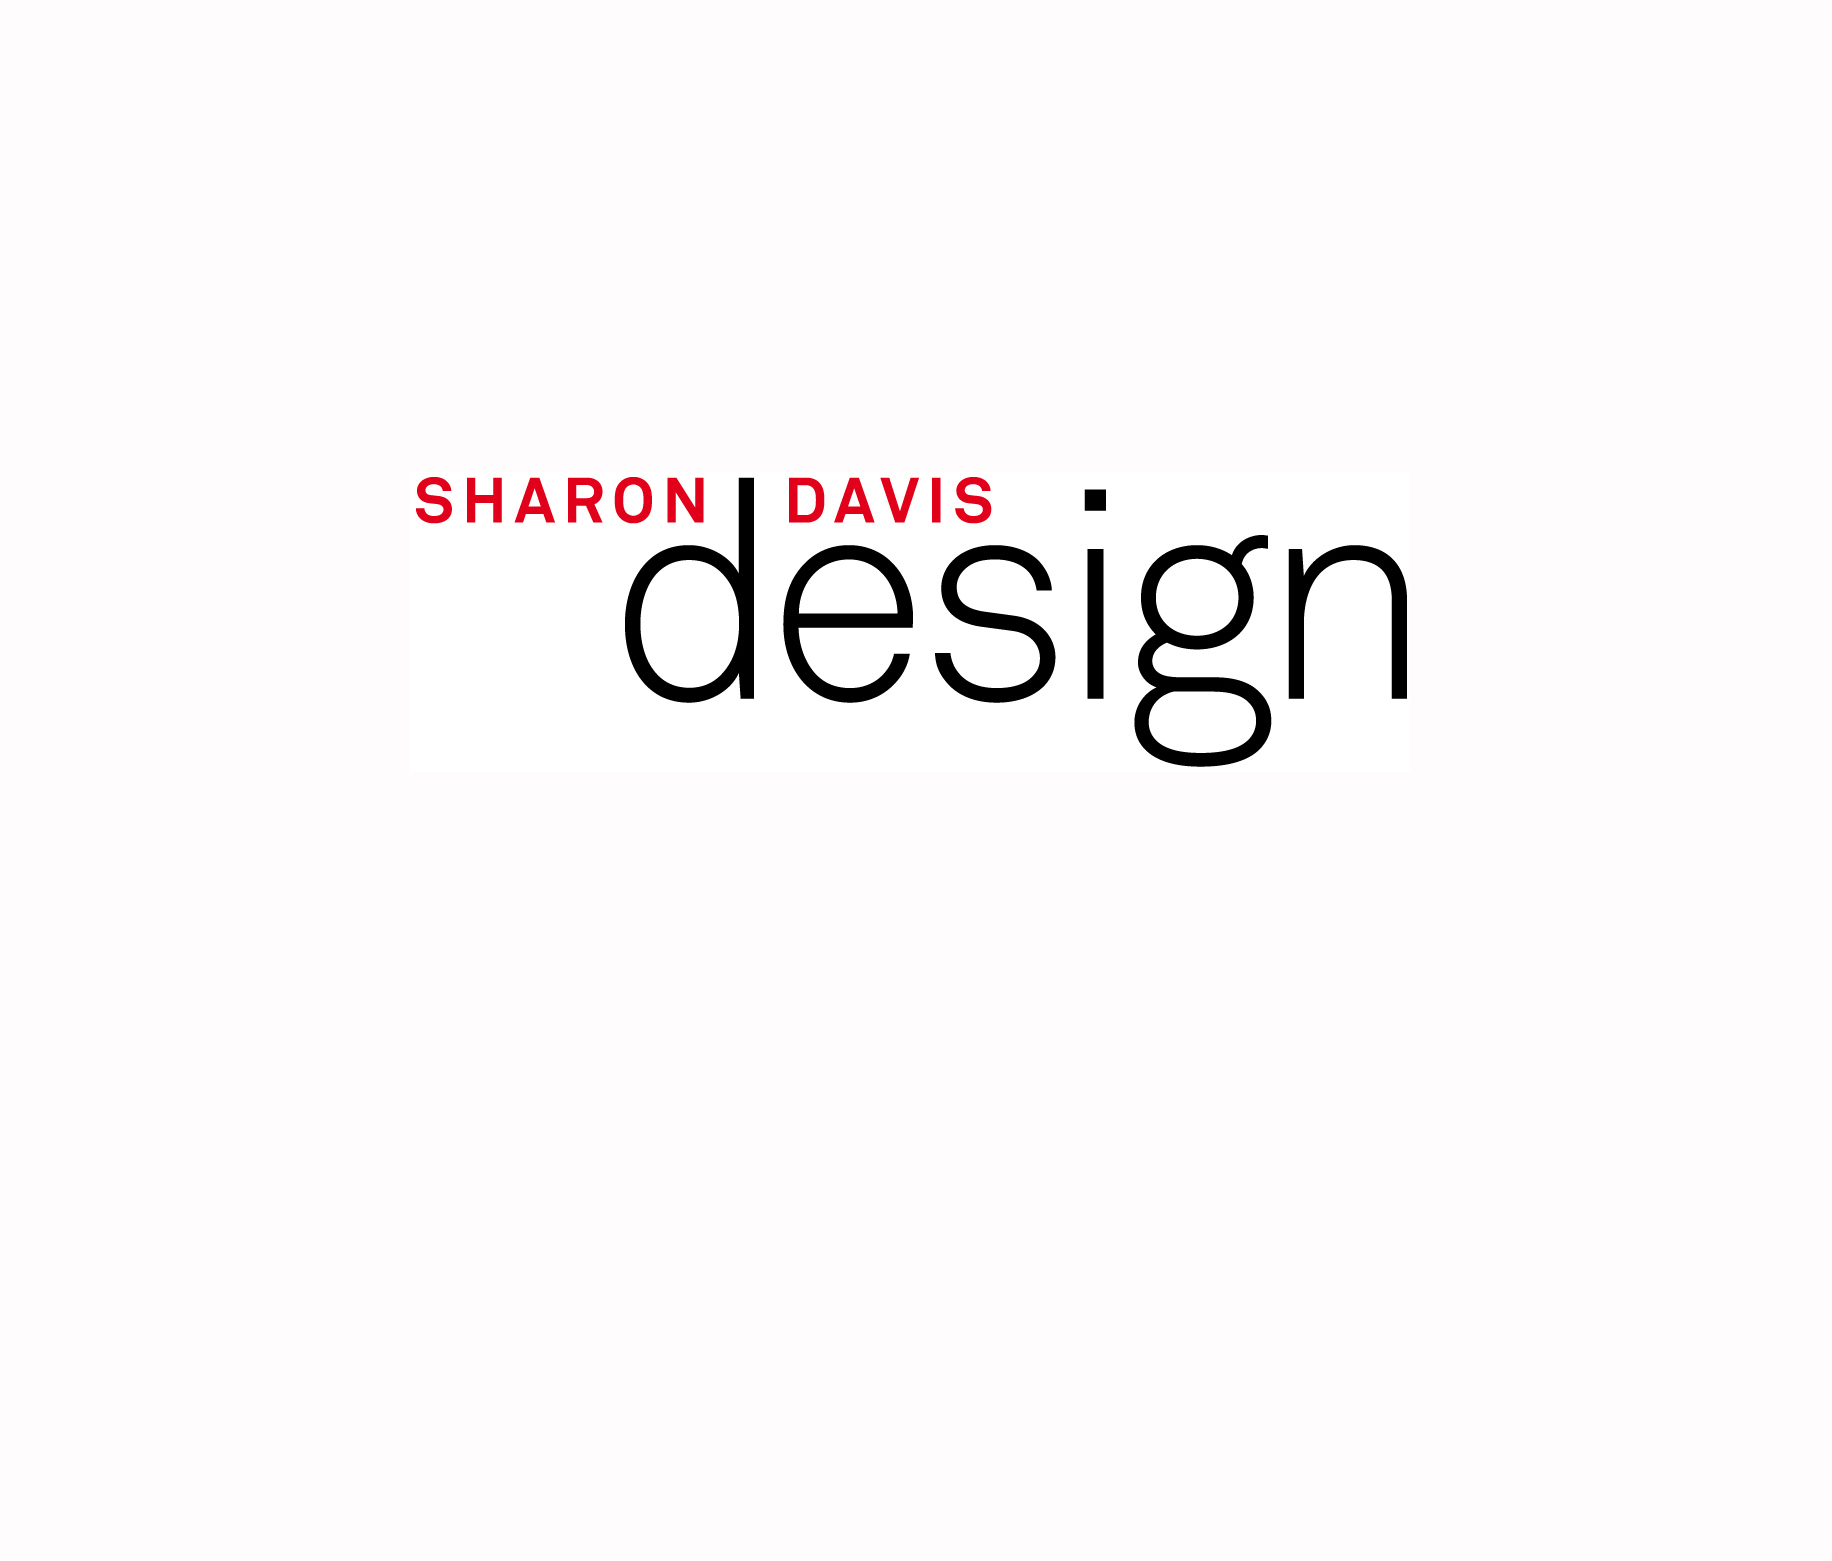 Sharon David's